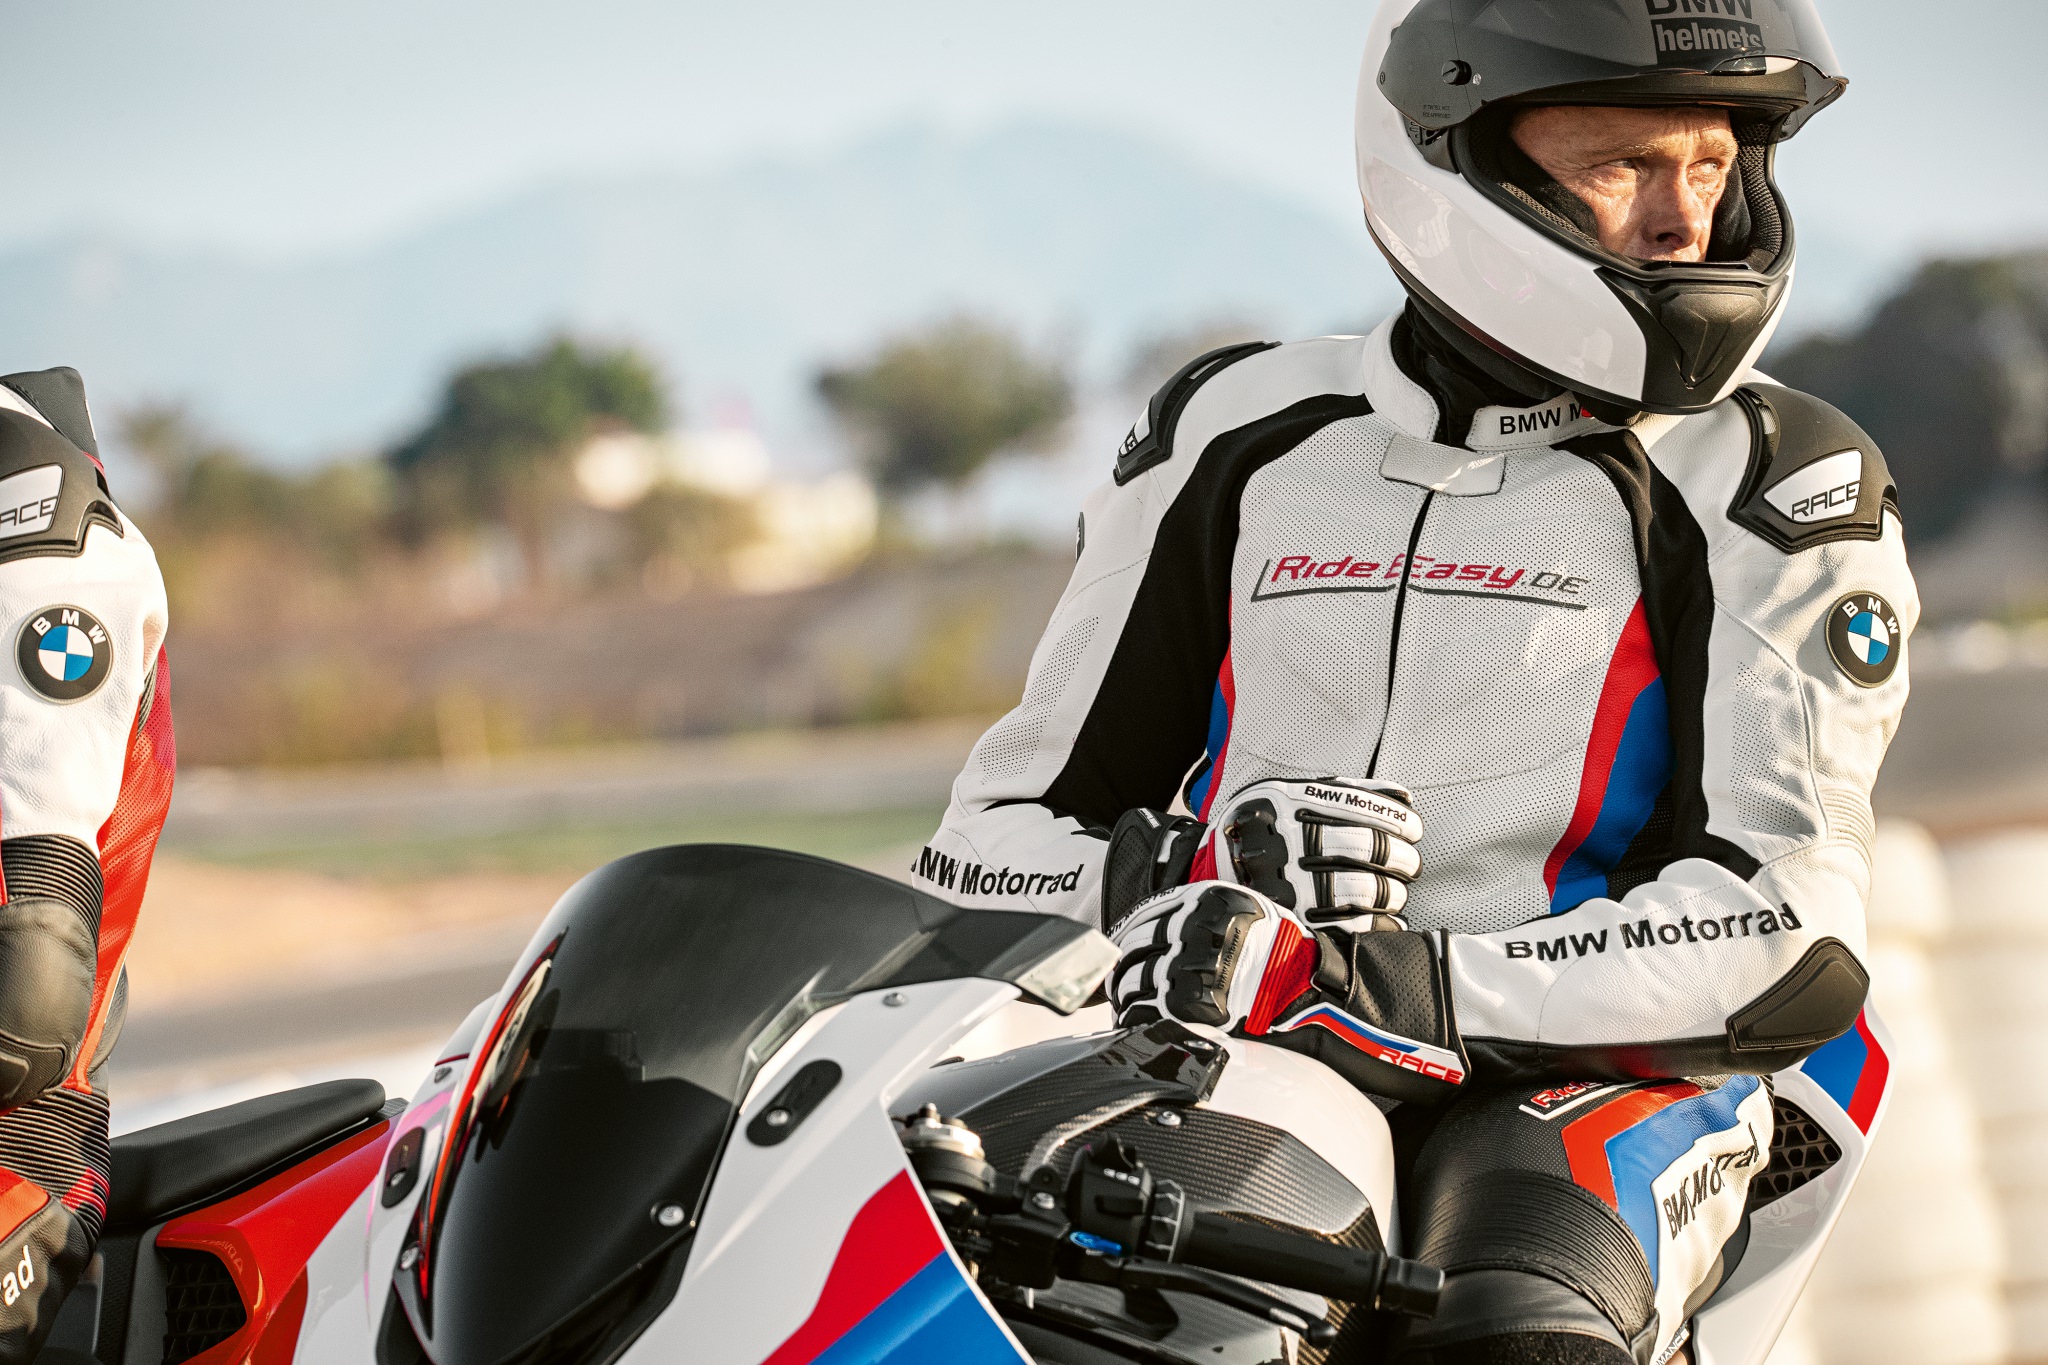 Le catalogue 2019 des équipements moto BMW Motorrad est sorti